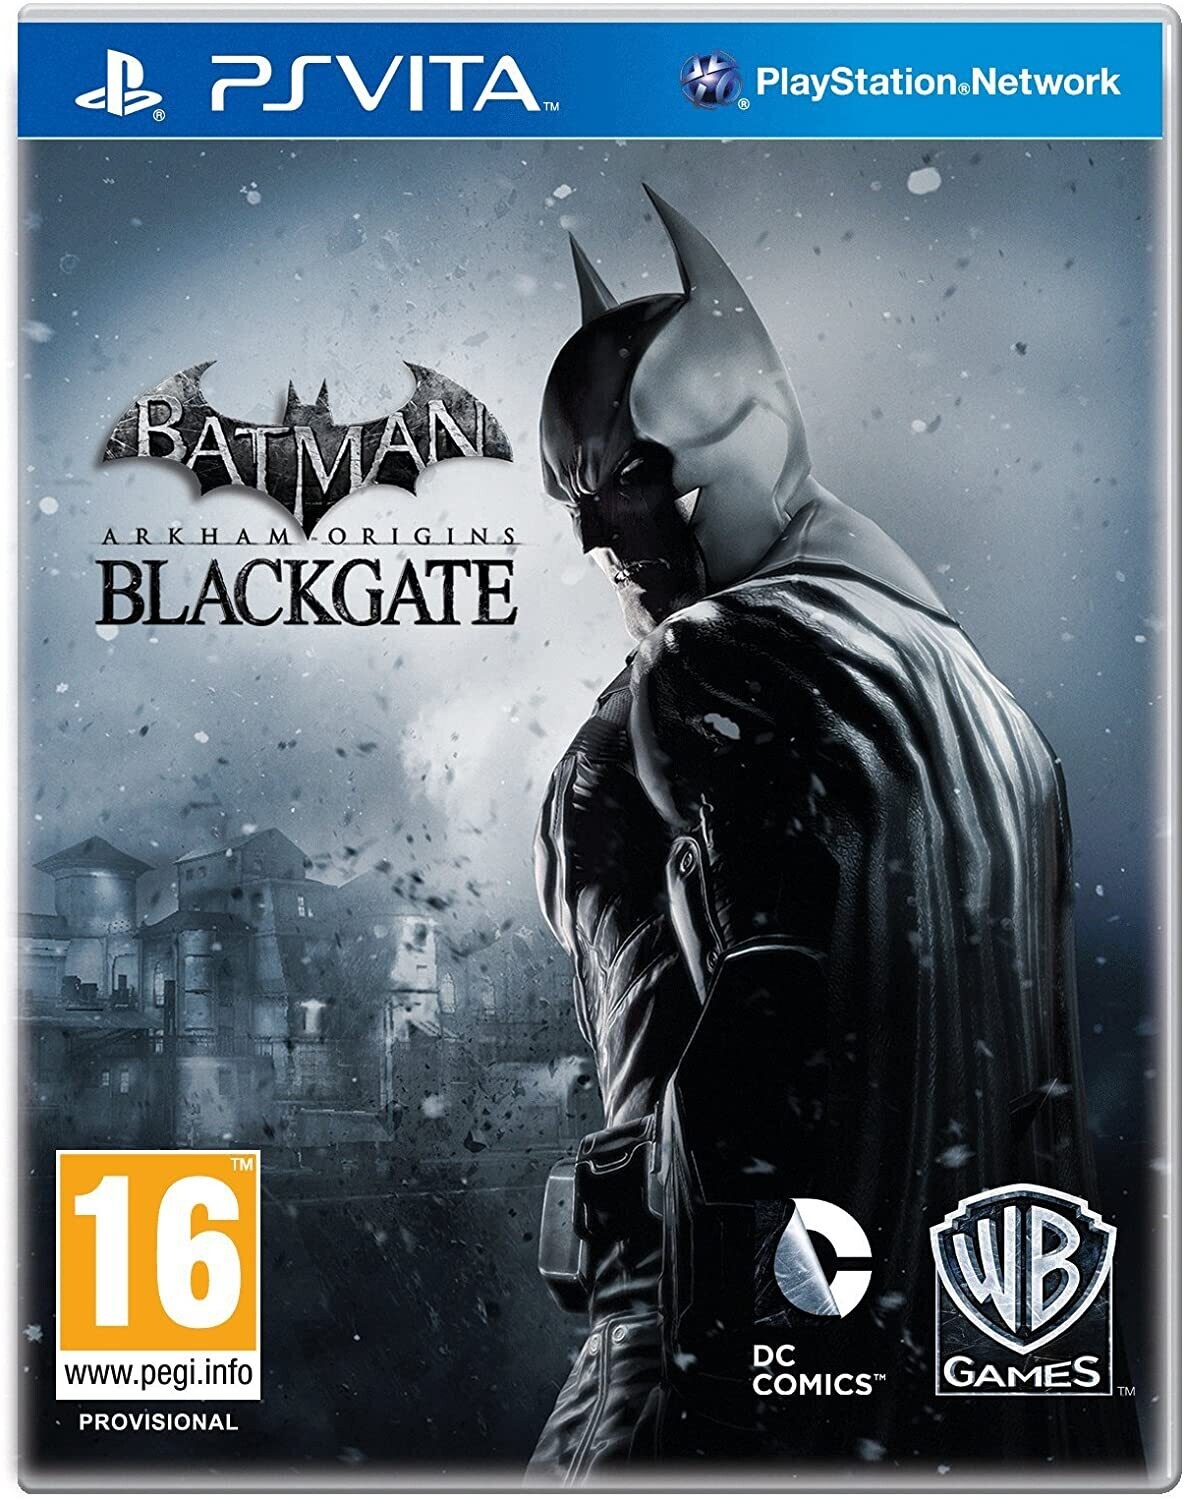 Batman: Arkham Origins Blackgate |PS Vita|